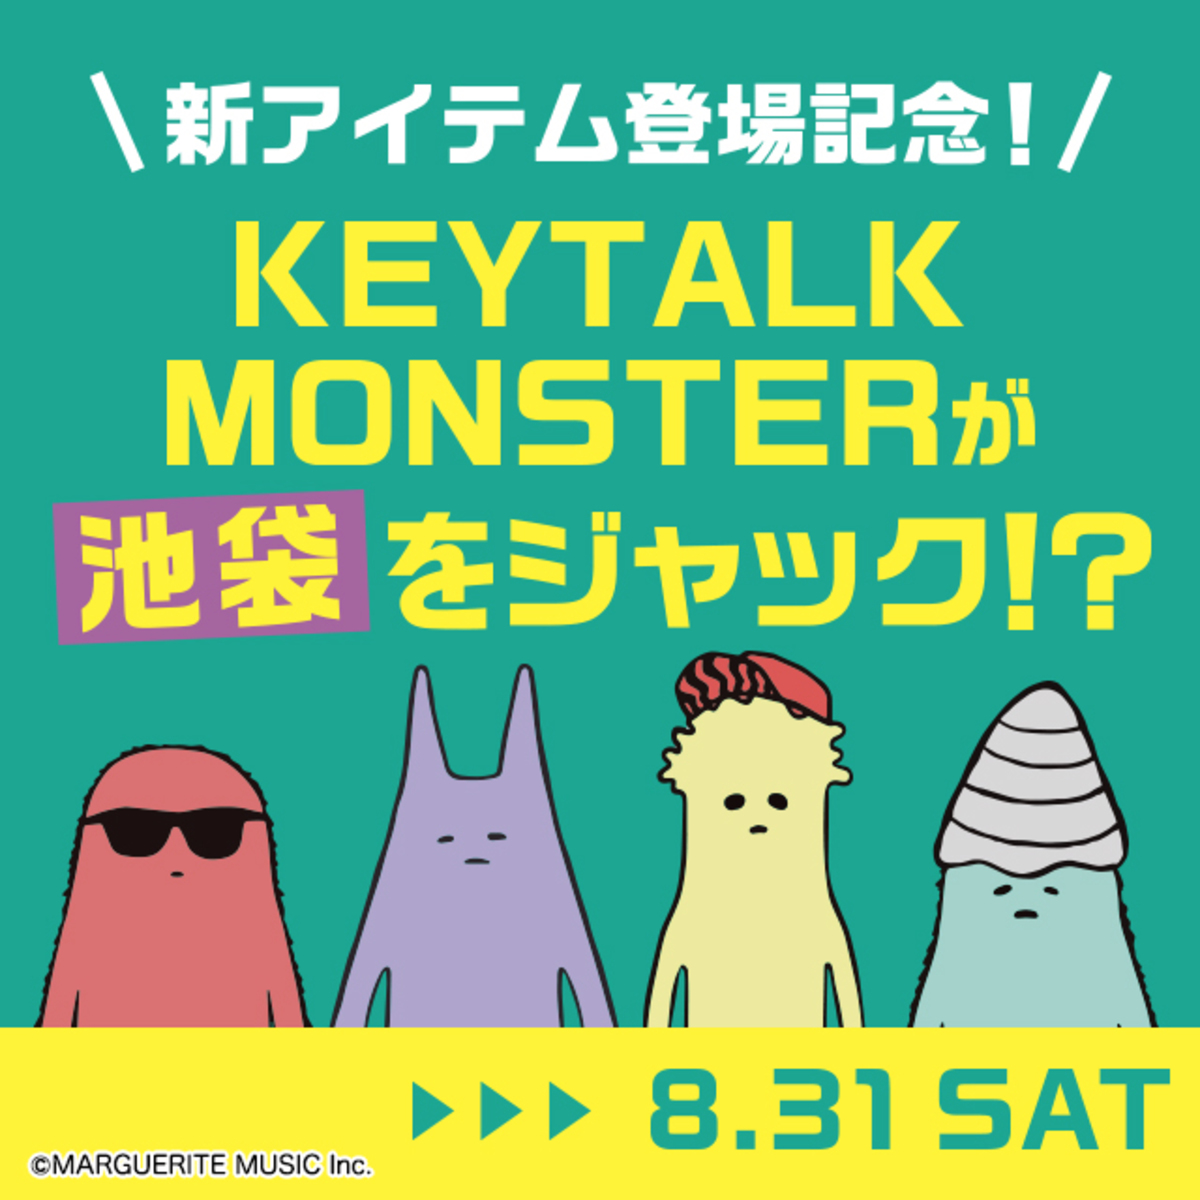 Keytalkの公式キャラクター Keytalk Monster のクレーンゲーム景品が8 30より登場 8 31池袋にてキャラクターとのグリーティング イベントも開催